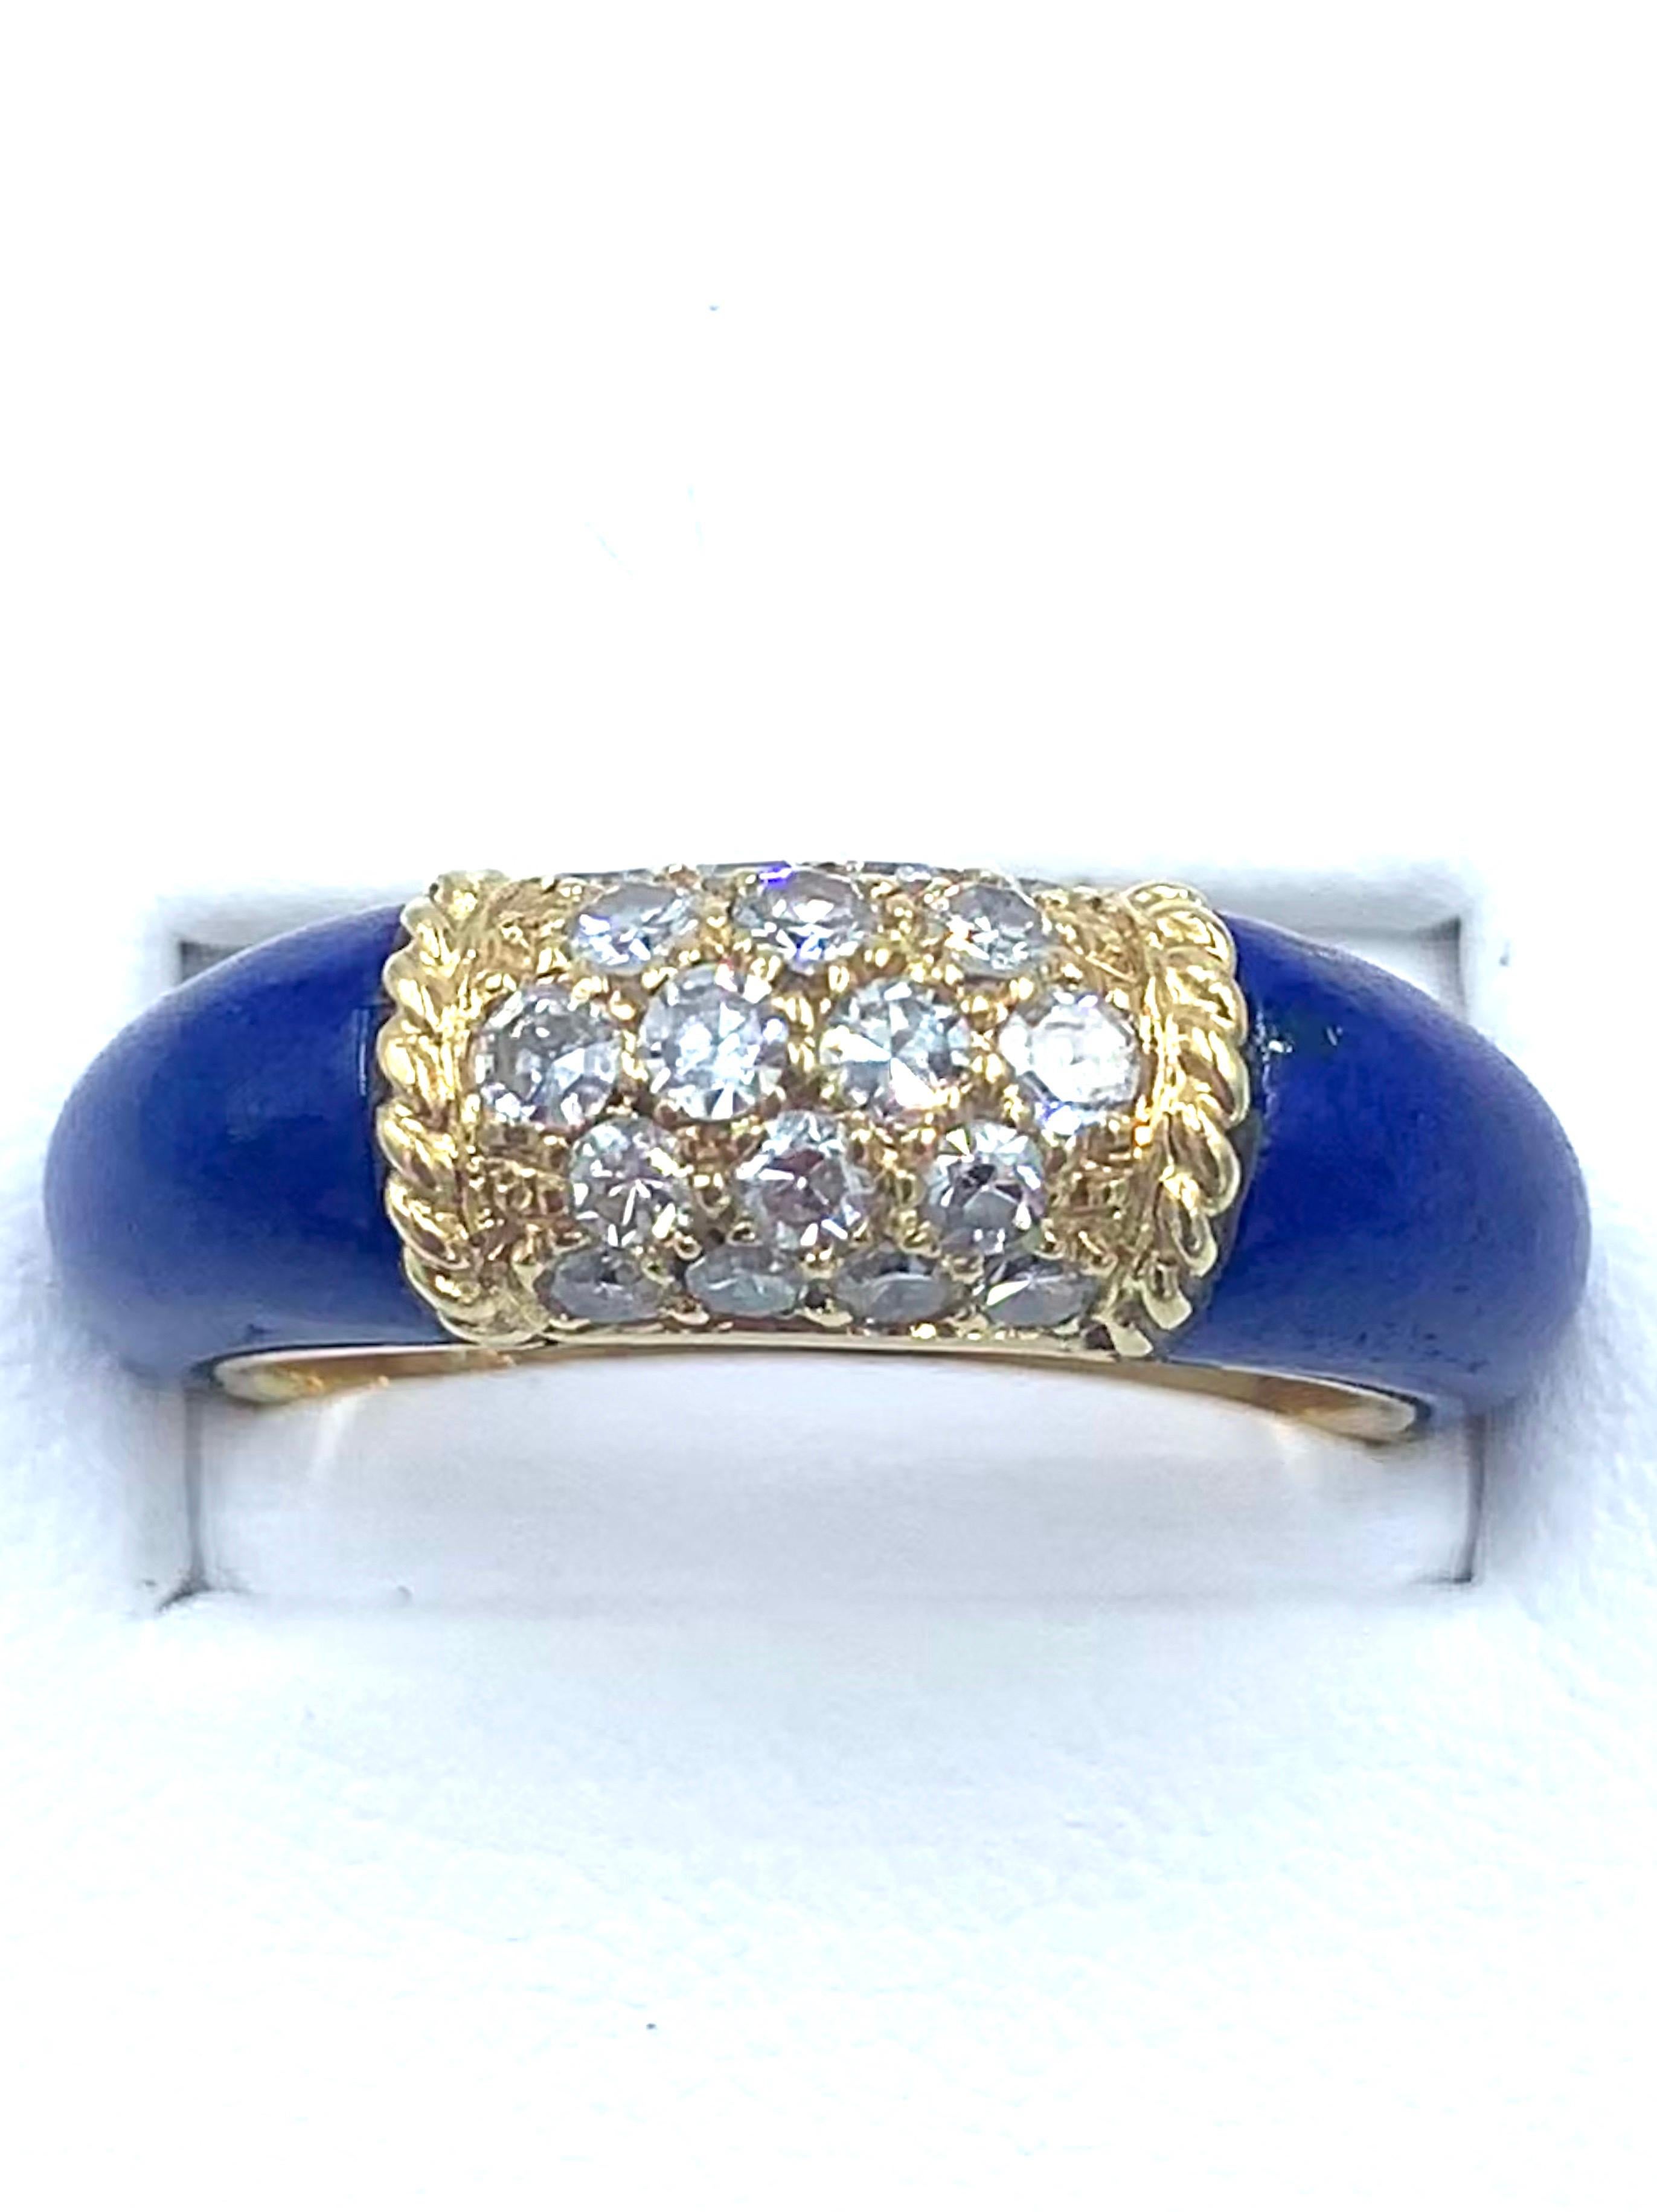 Van Cleef & Arpels Blue Lapis and Diamond Ring in 18 Karat Yellow Gold 11